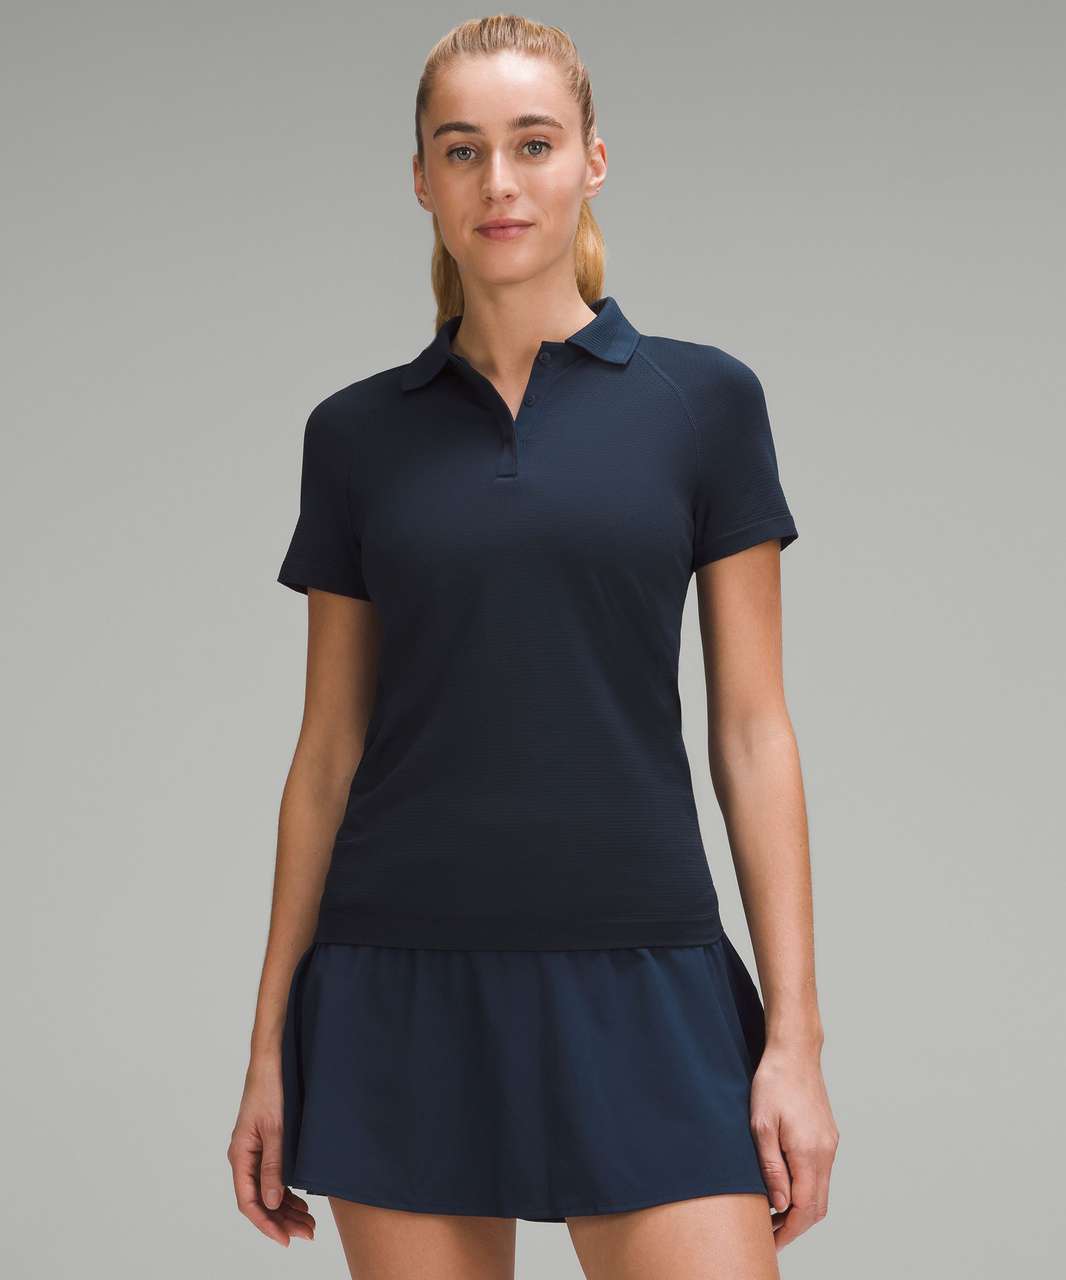 Lululemon Swiftly Tech Short-Sleeve Polo Shirt - True Navy / True Navy